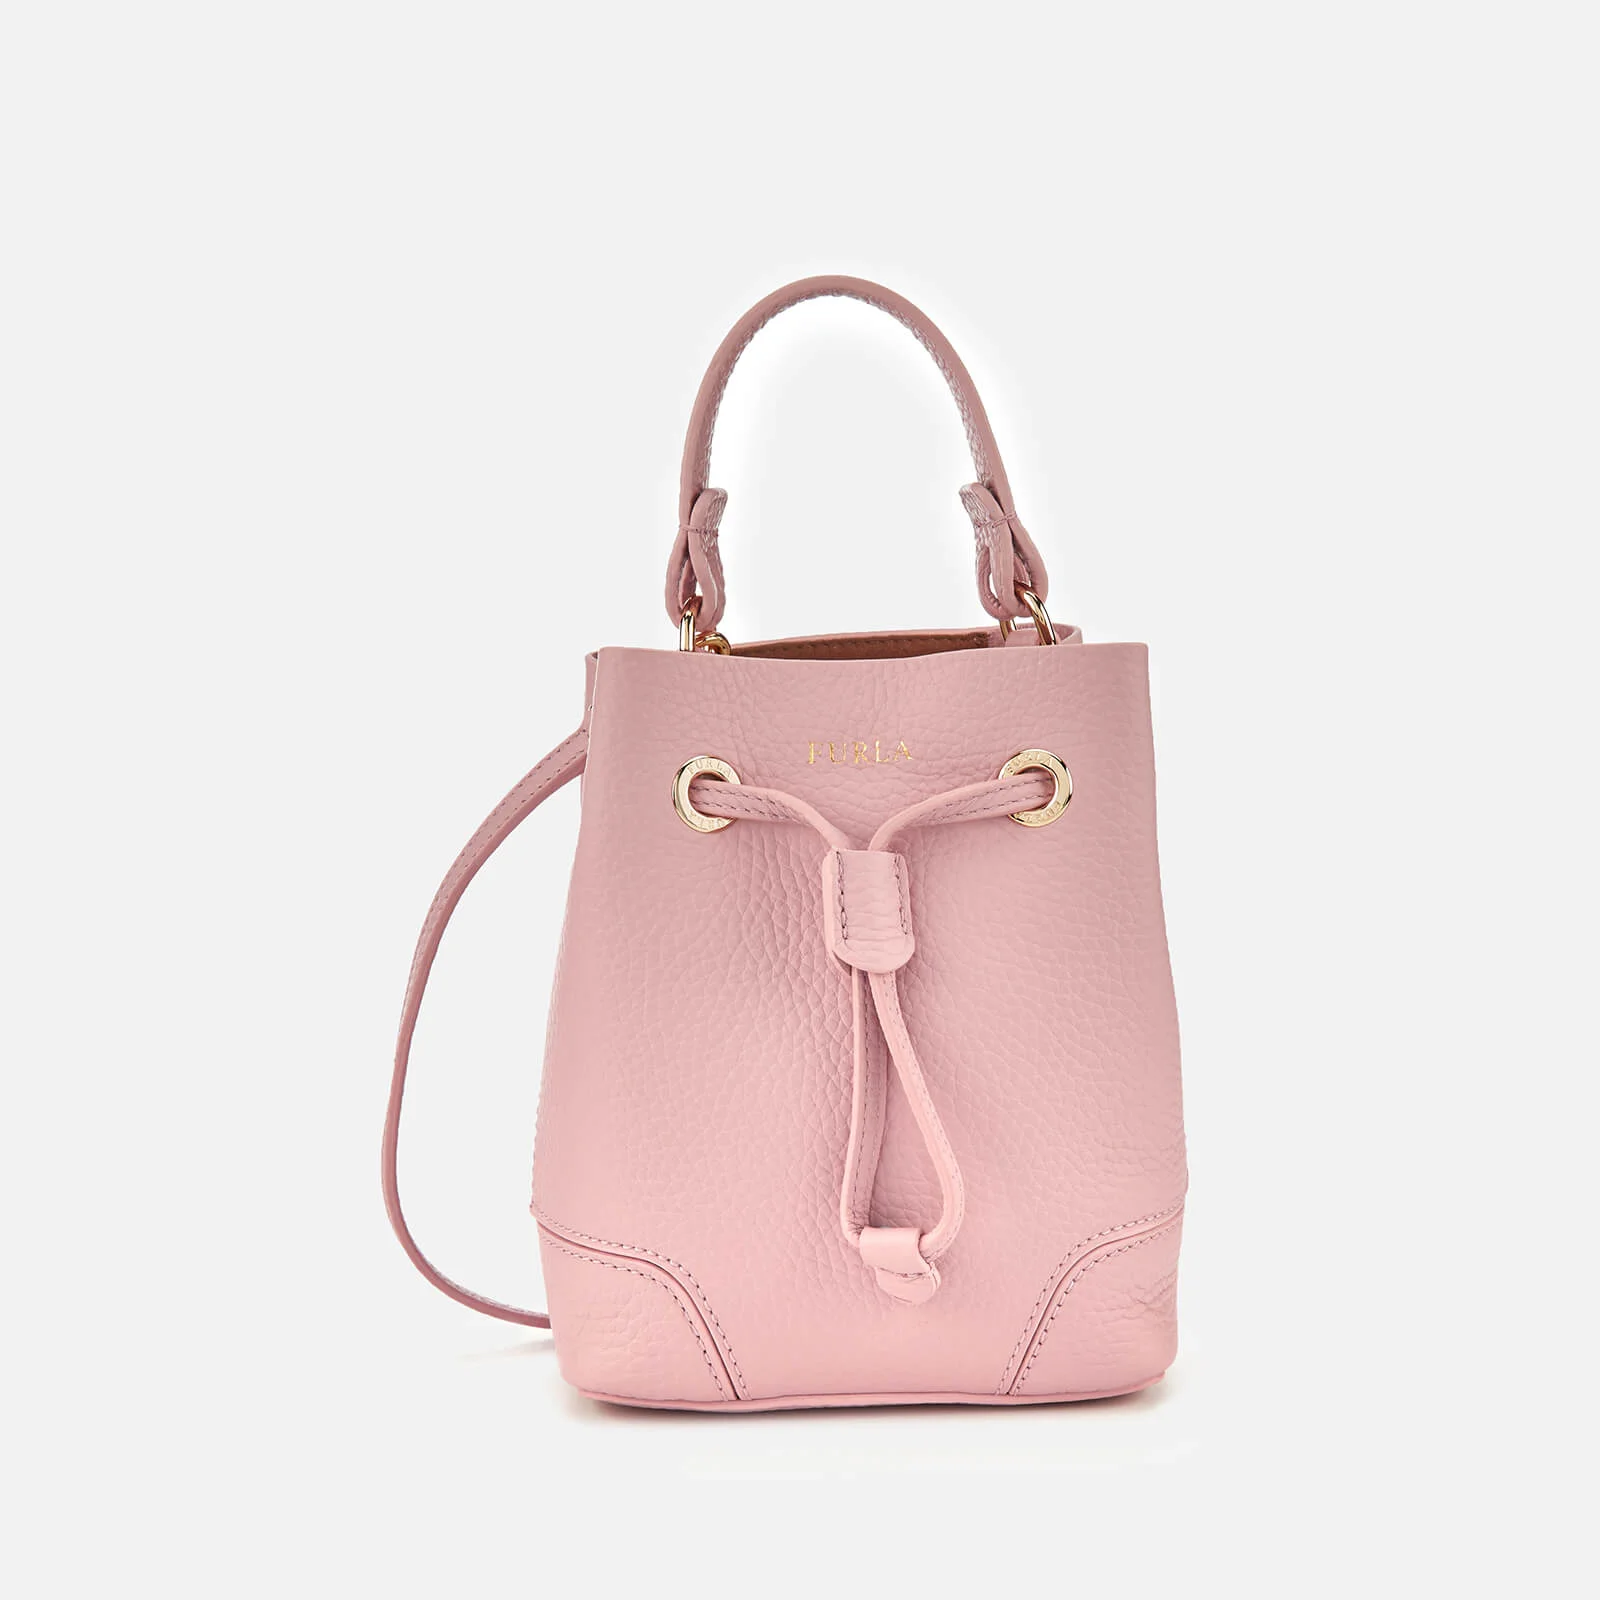 Furla Women's Stacy Mini Drawstring Bag - Light Pink Image 1